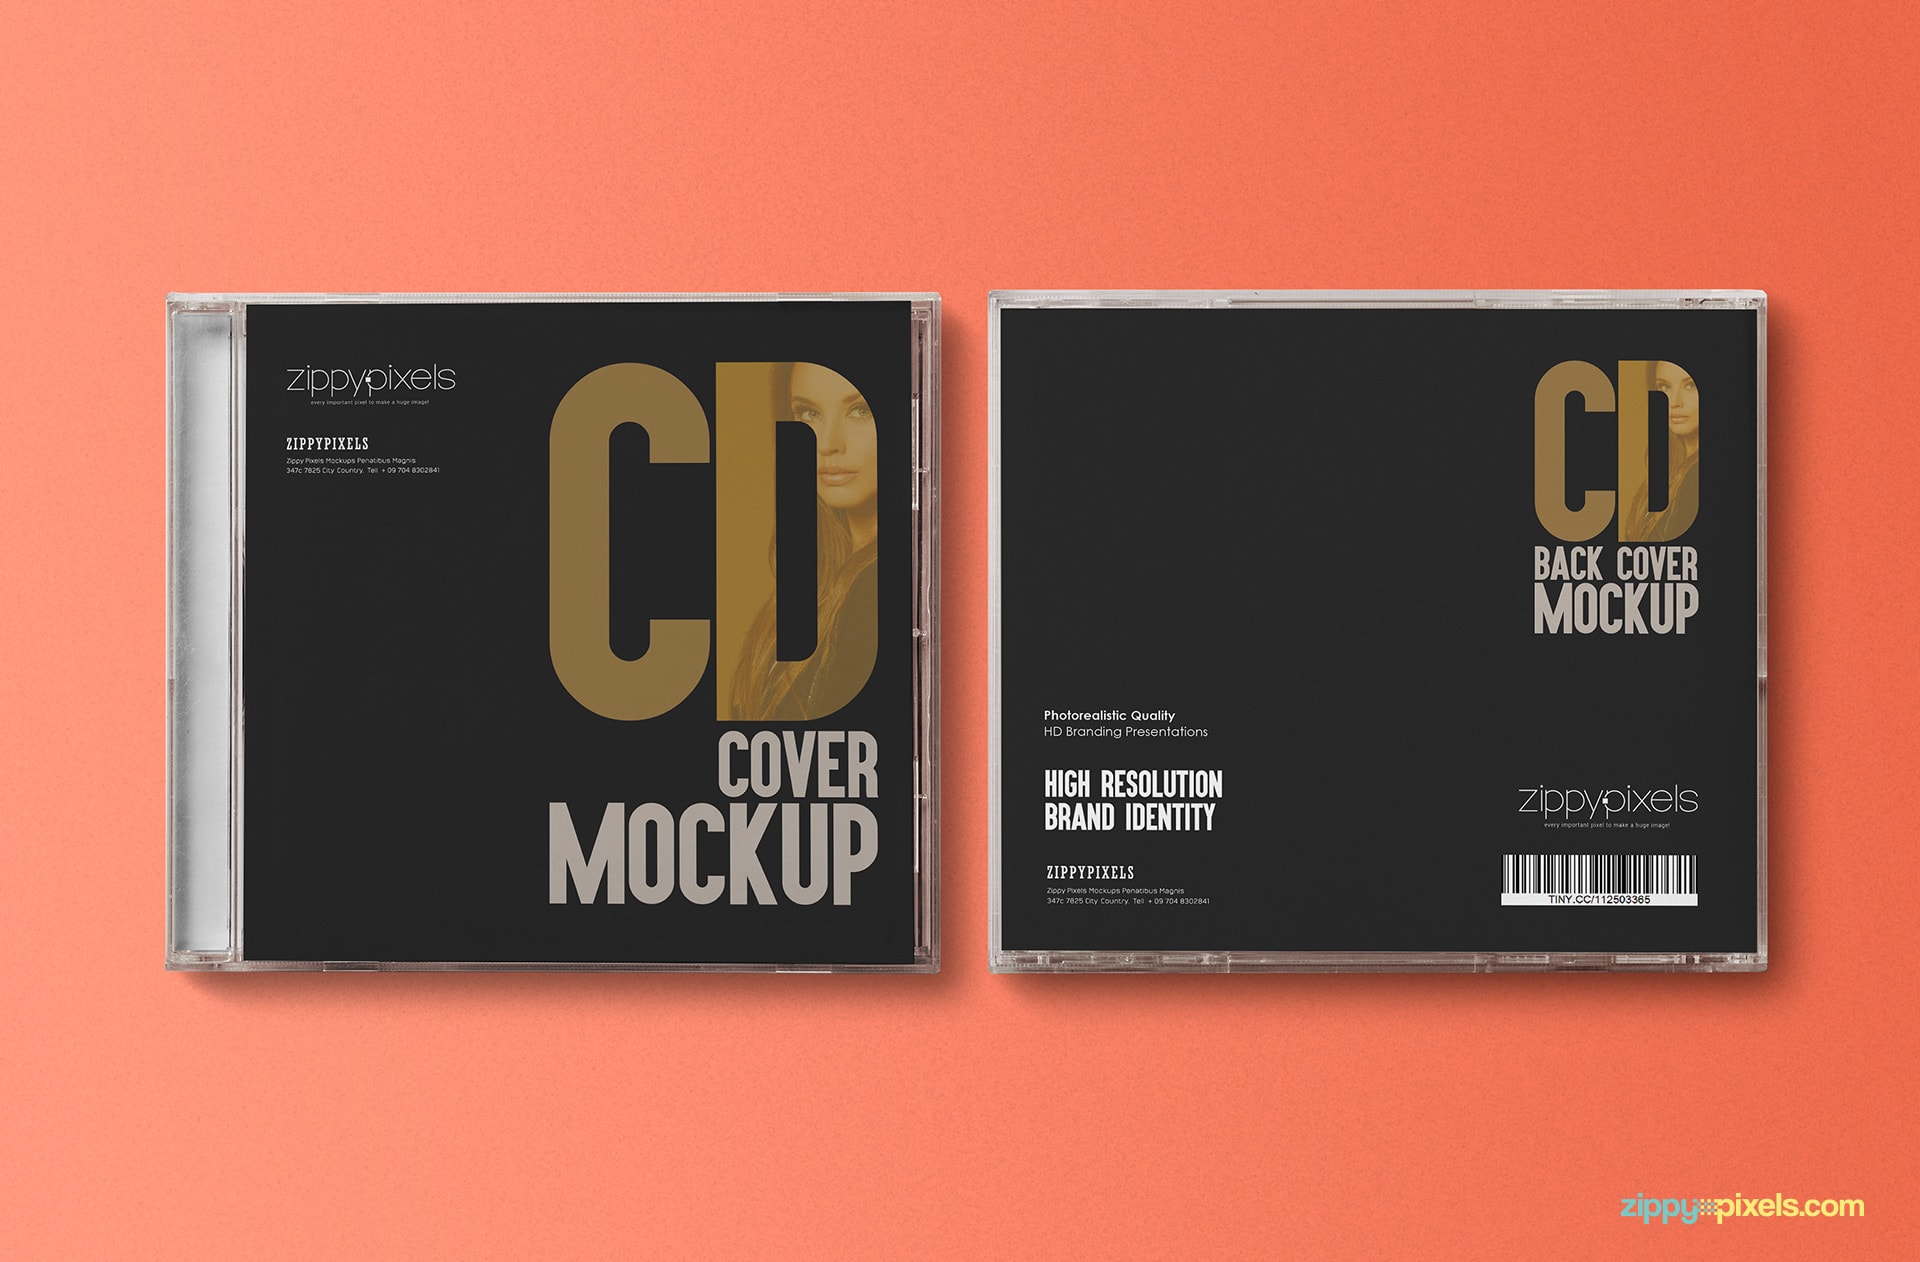 CD Jewel Case CD Label Mockup Free PSD Download ZippyPixels